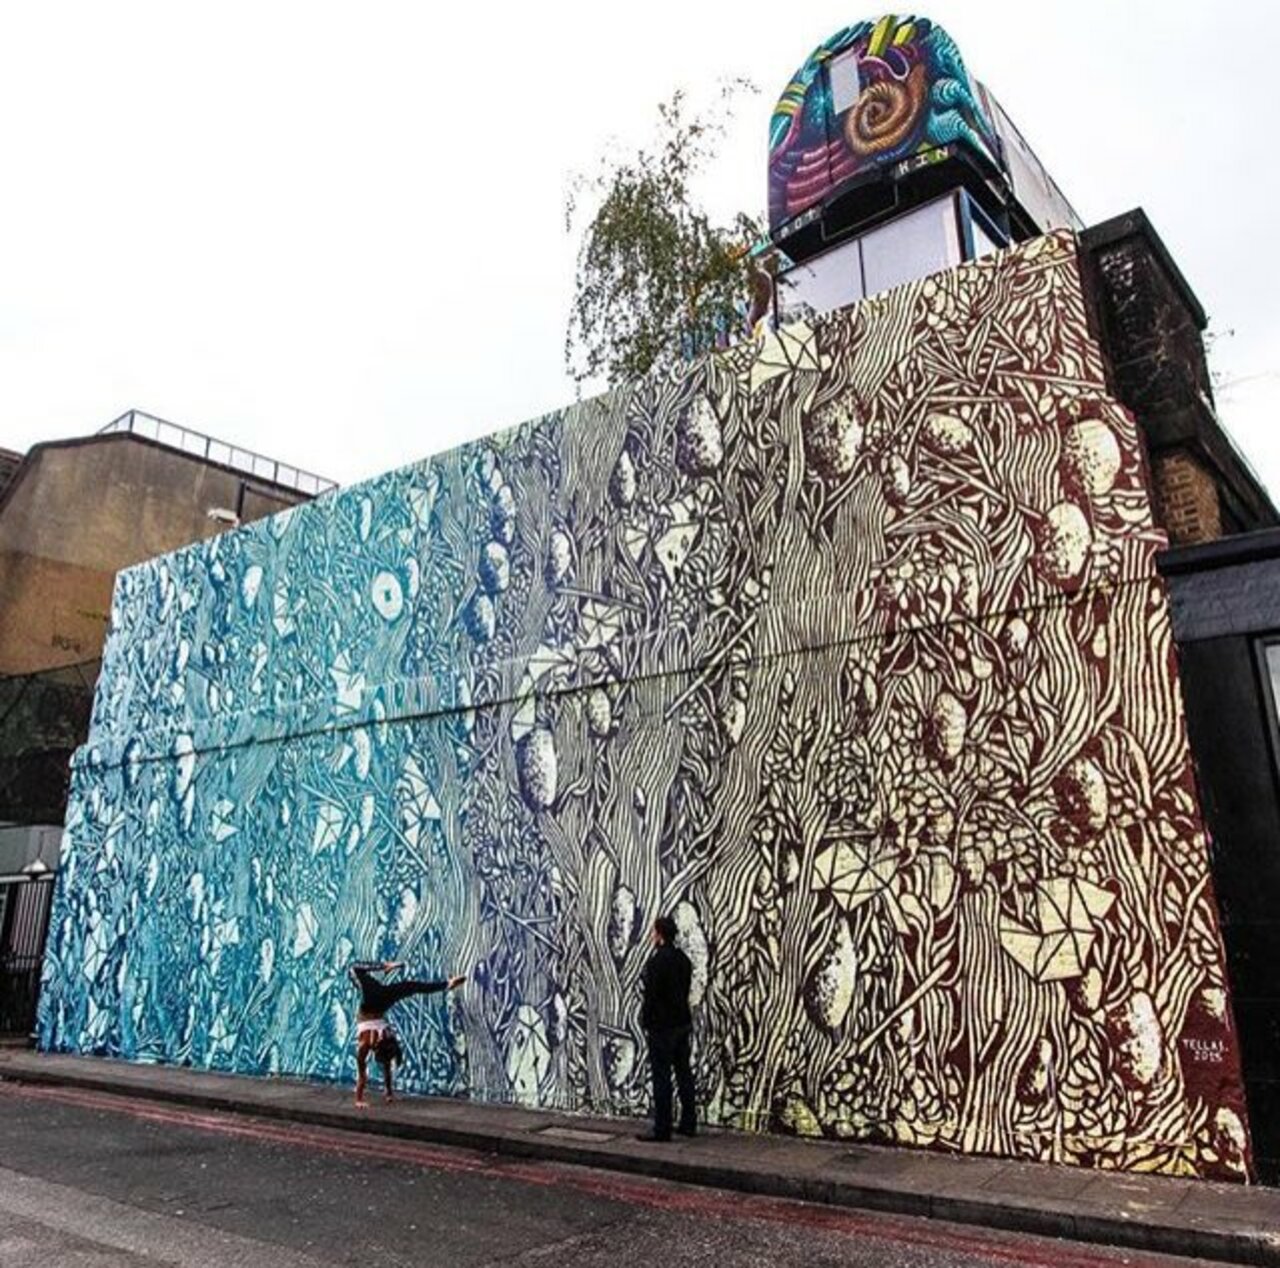 New Street Art by Tellas in Shoreditch London 

#art #graffiti #mural #streetart https://t.co/nPF1HKQ08E